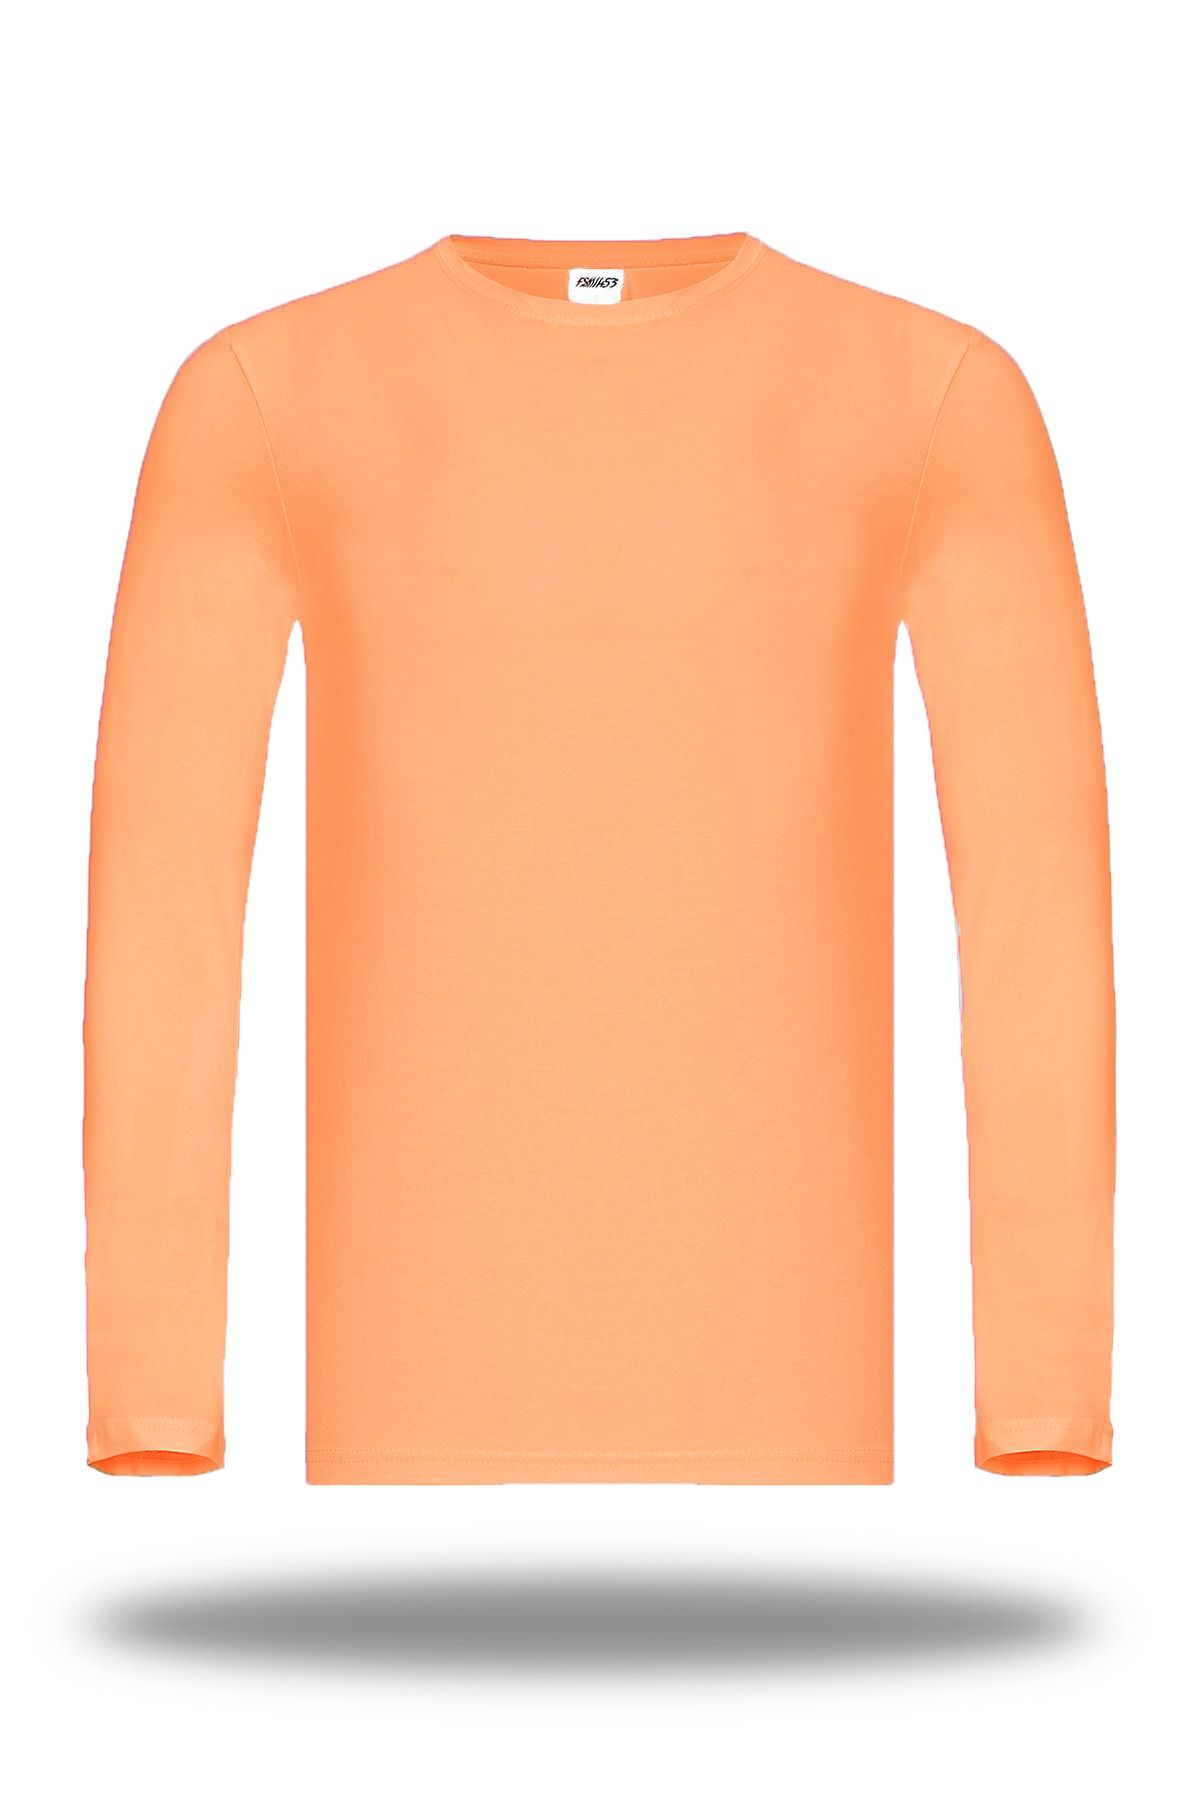 fsm1453 Erkek Çocuk Pamuklu Uzun Kollu T-shirt Likralı Slim Fit Sweatshirt 221-222